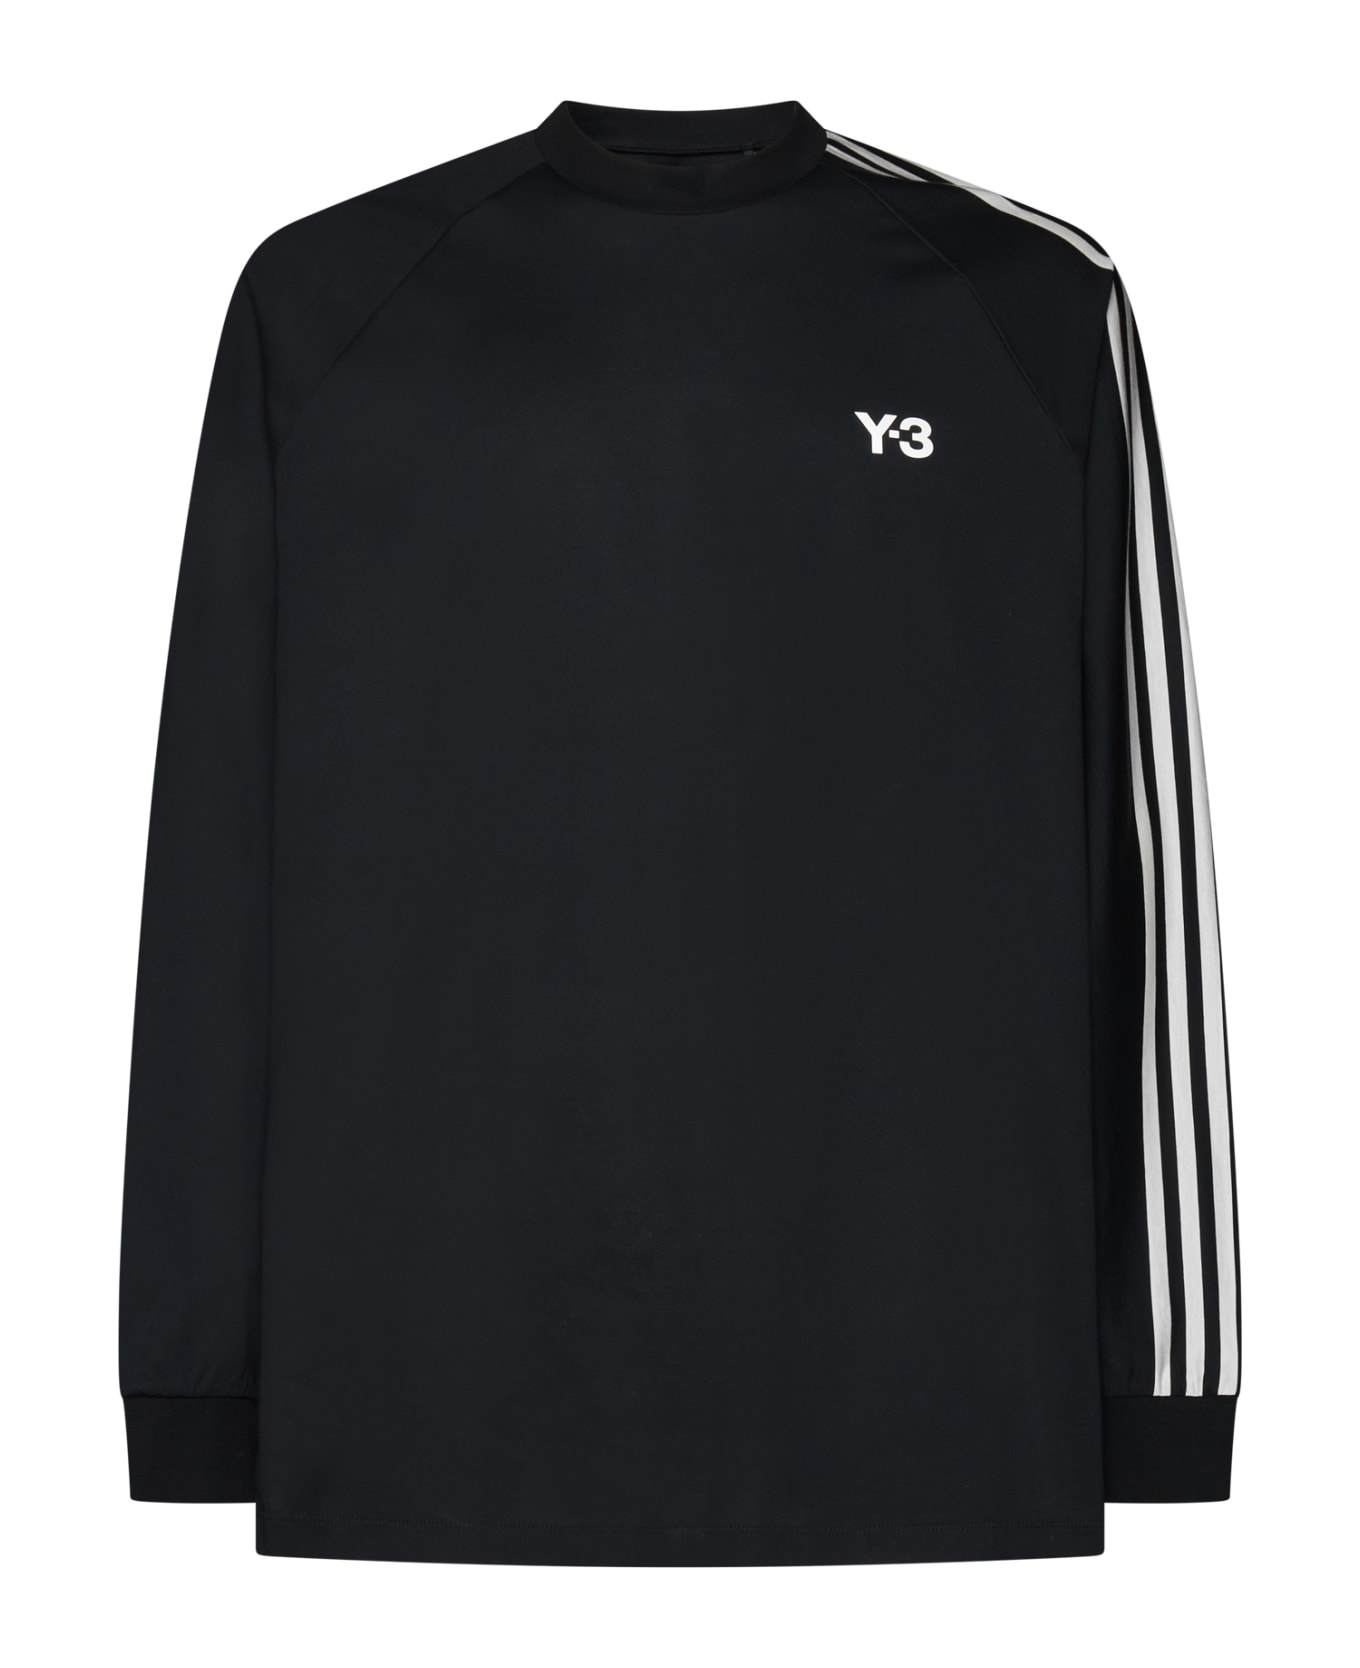 Y-3 Fleece - Black/off white